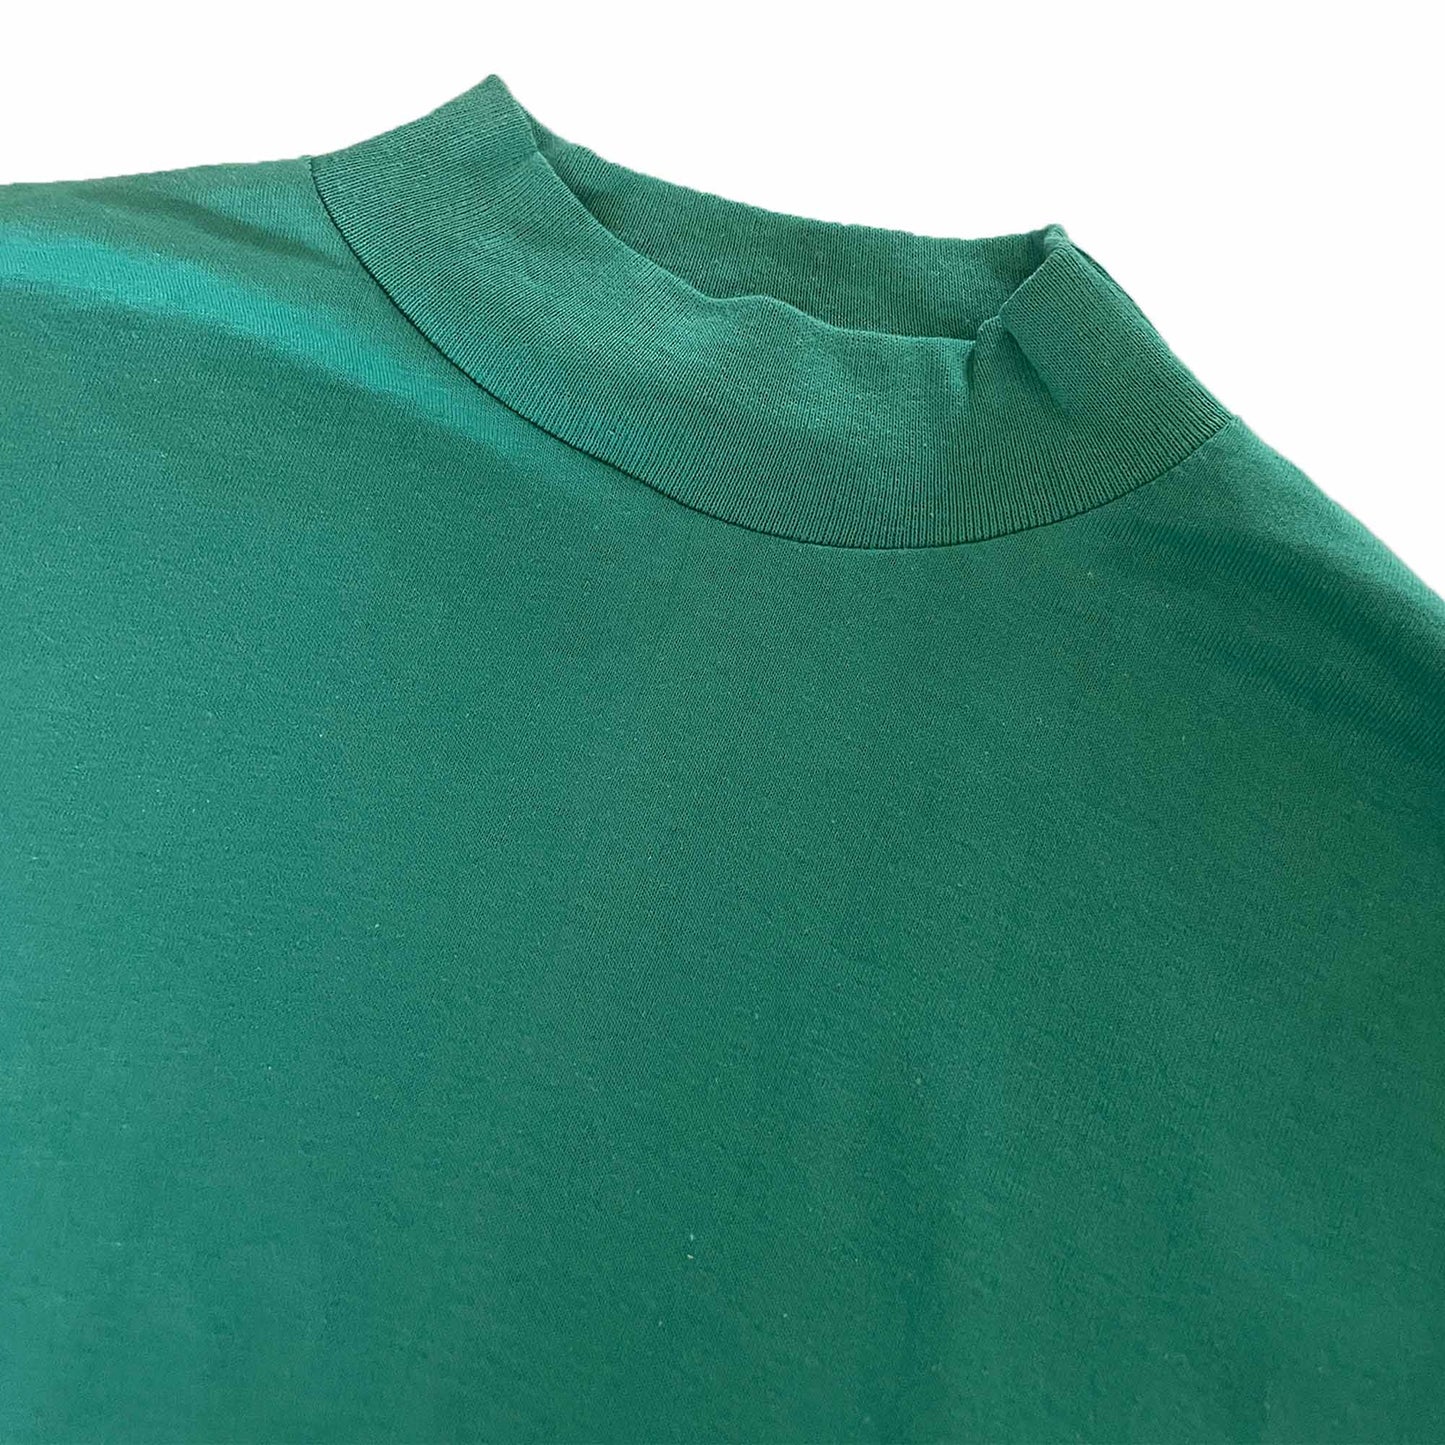 Powell Peralta 'Hawk' Long Sleeve T-Shirt (Green) VINTAGE 90s